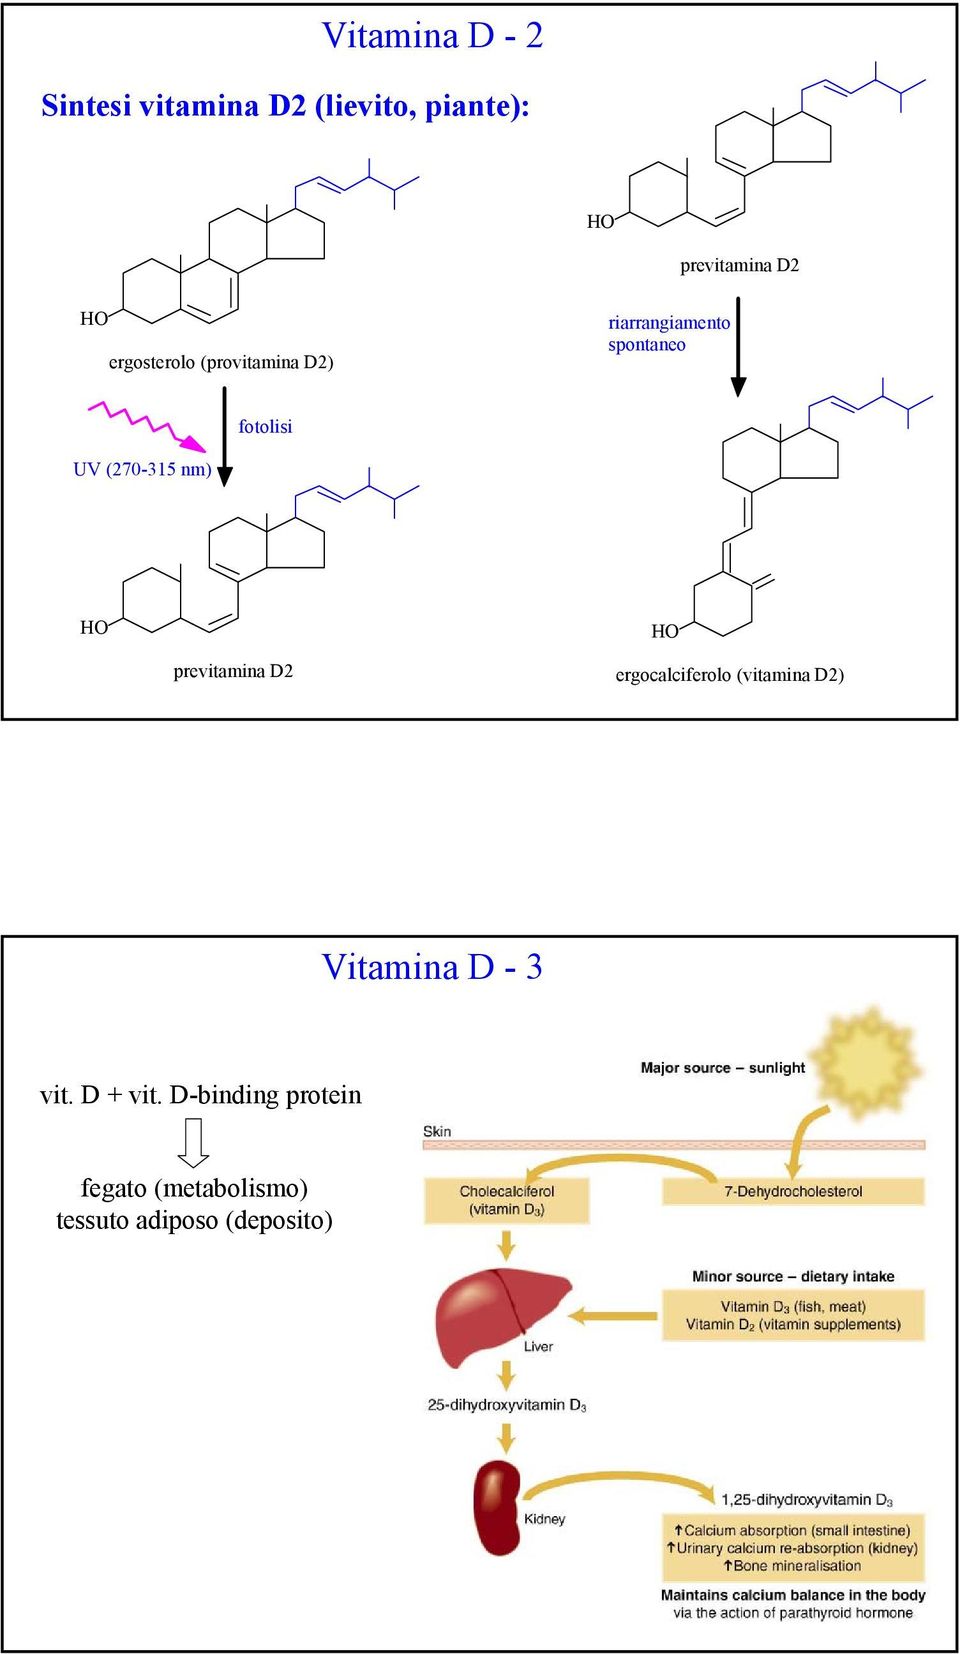 fotolisi UV (270-315 nm) previtamina D2 ergocalciferolo (vitamina D2)